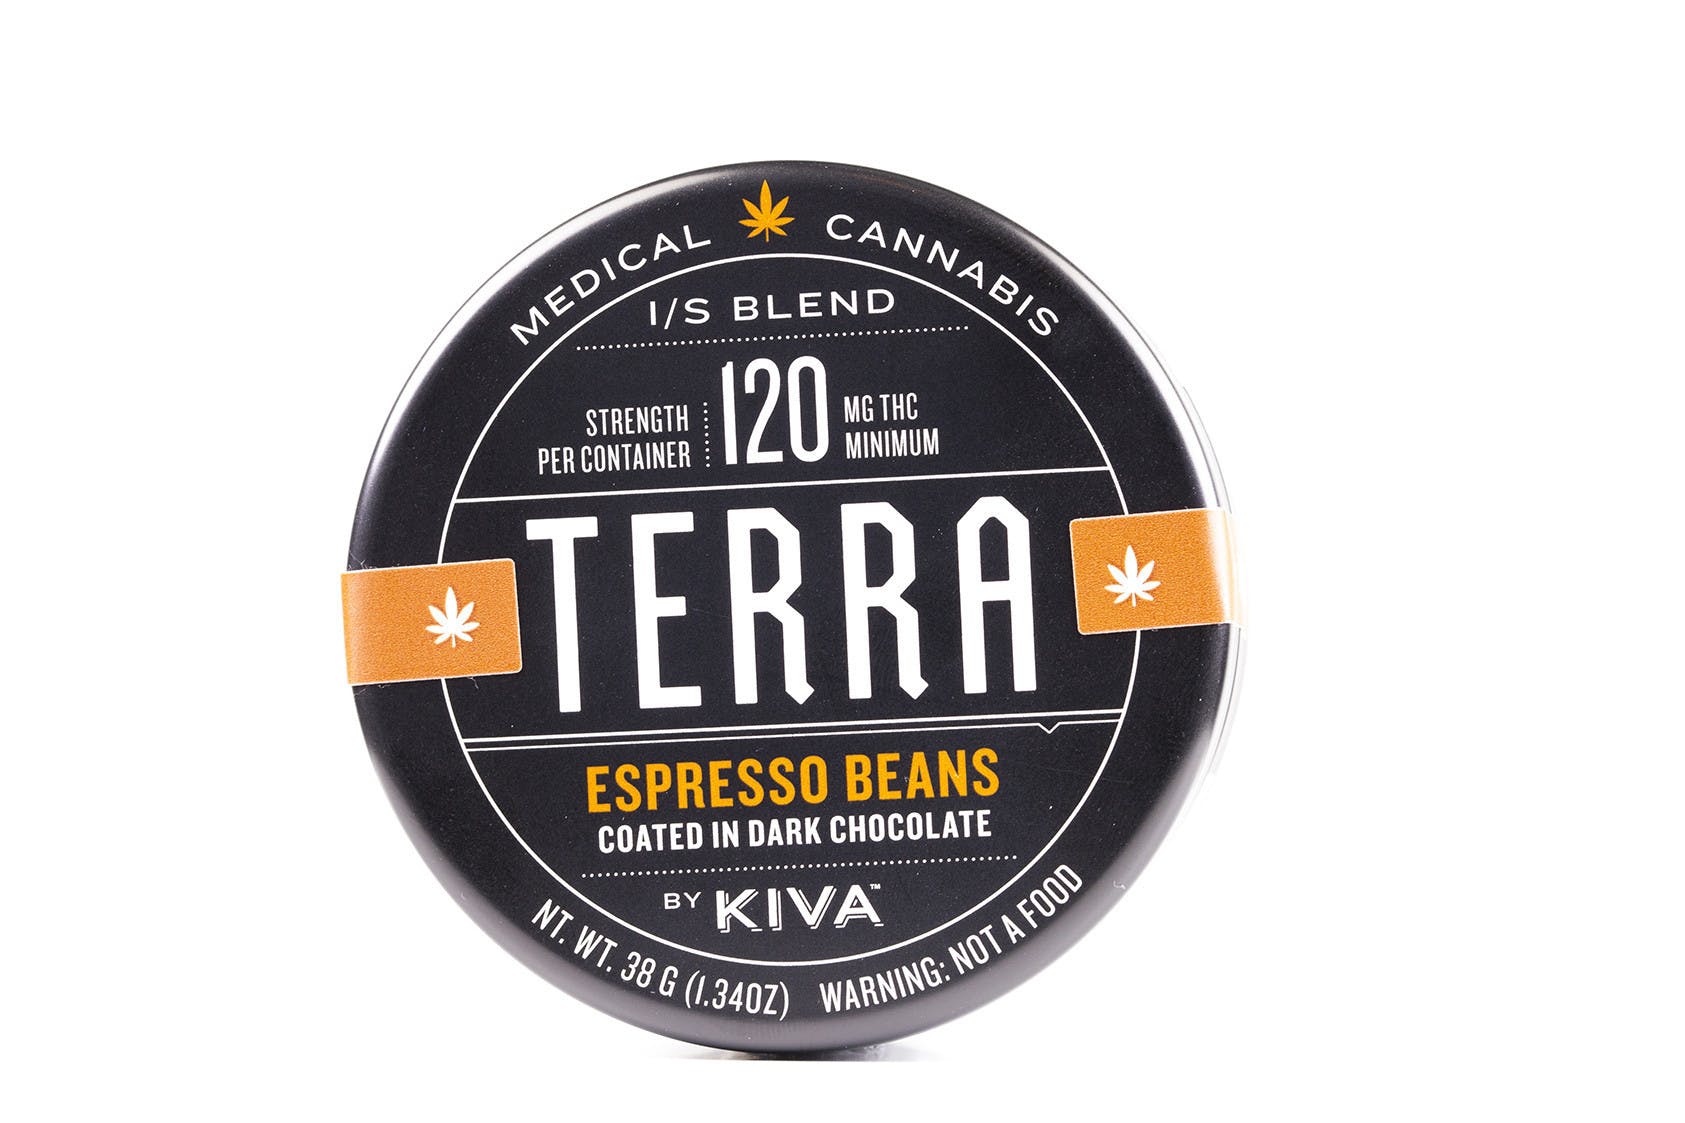 edible-kiva-confections-kiva-terra-espresso-bites-120mg